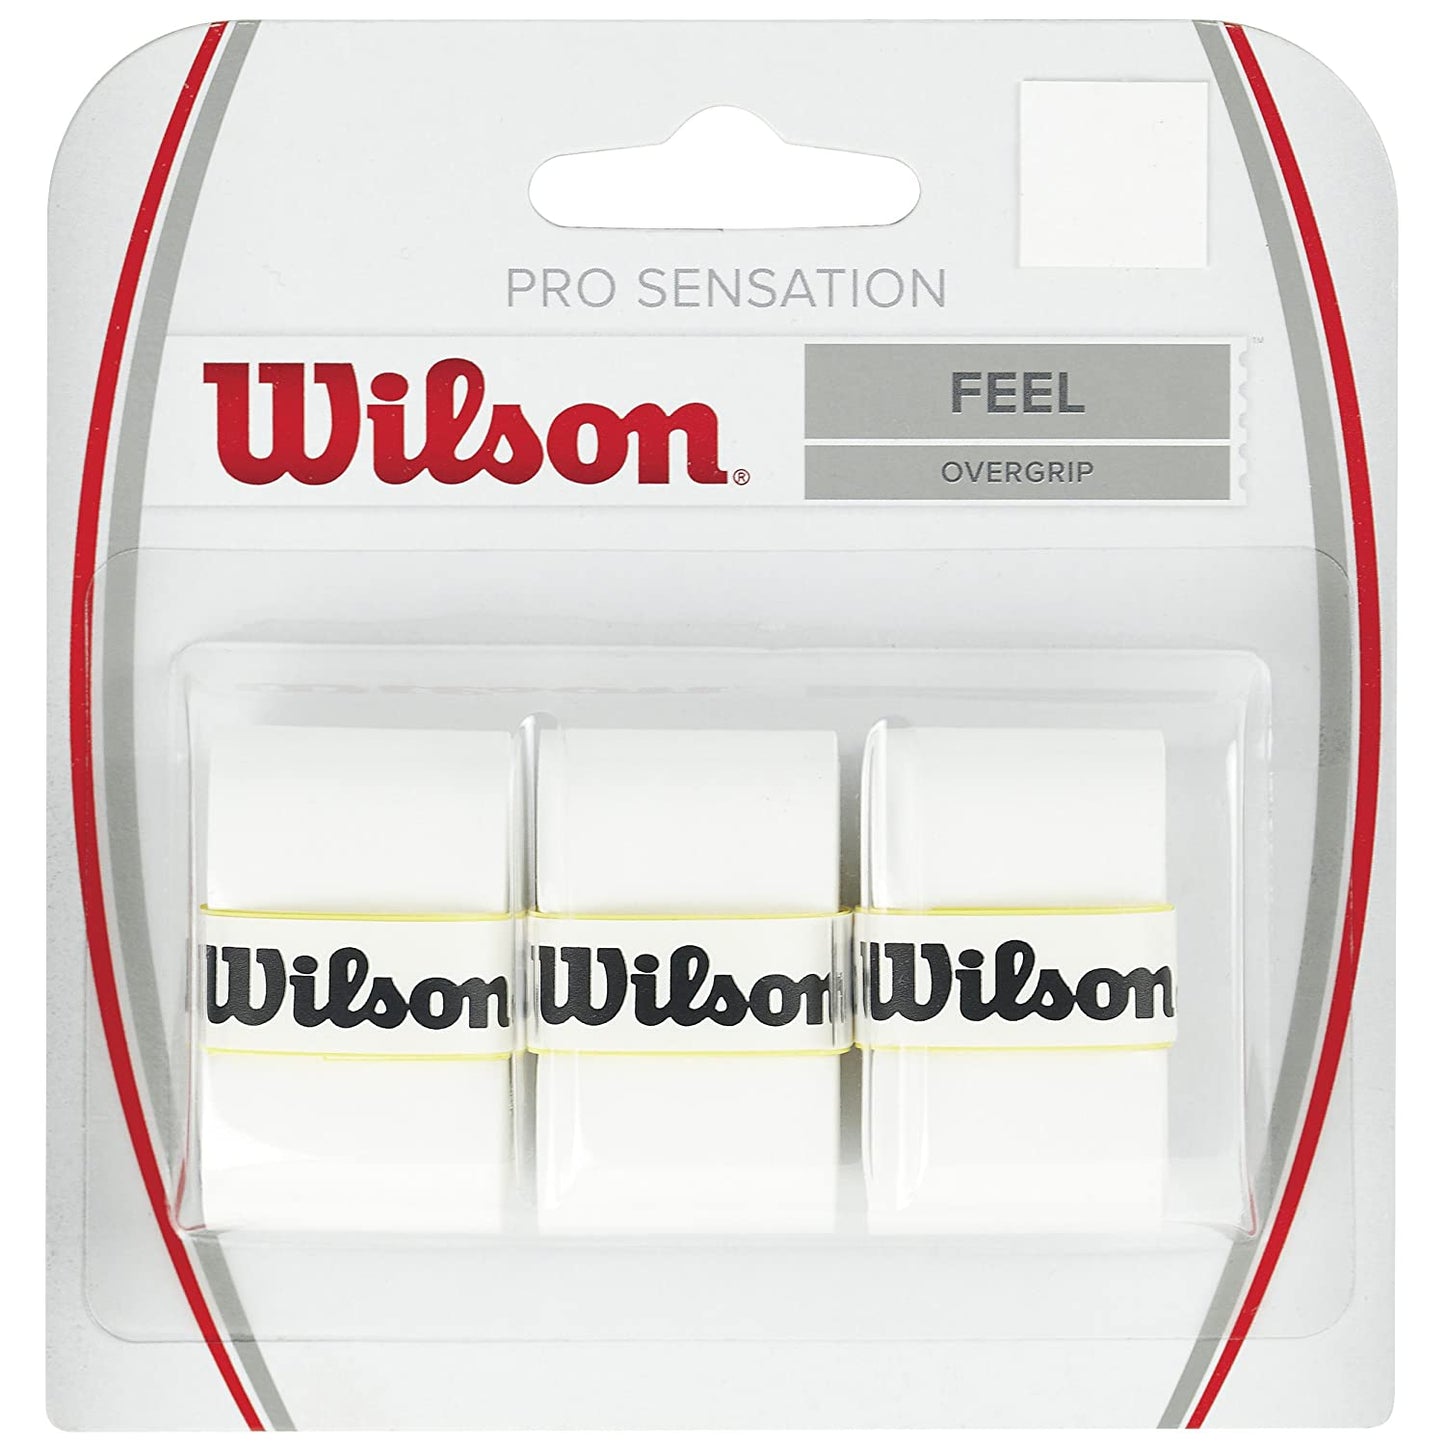 Wilson Pro Sensation Feel Tennis Racquet Over Grip - Best Price online Prokicksports.com